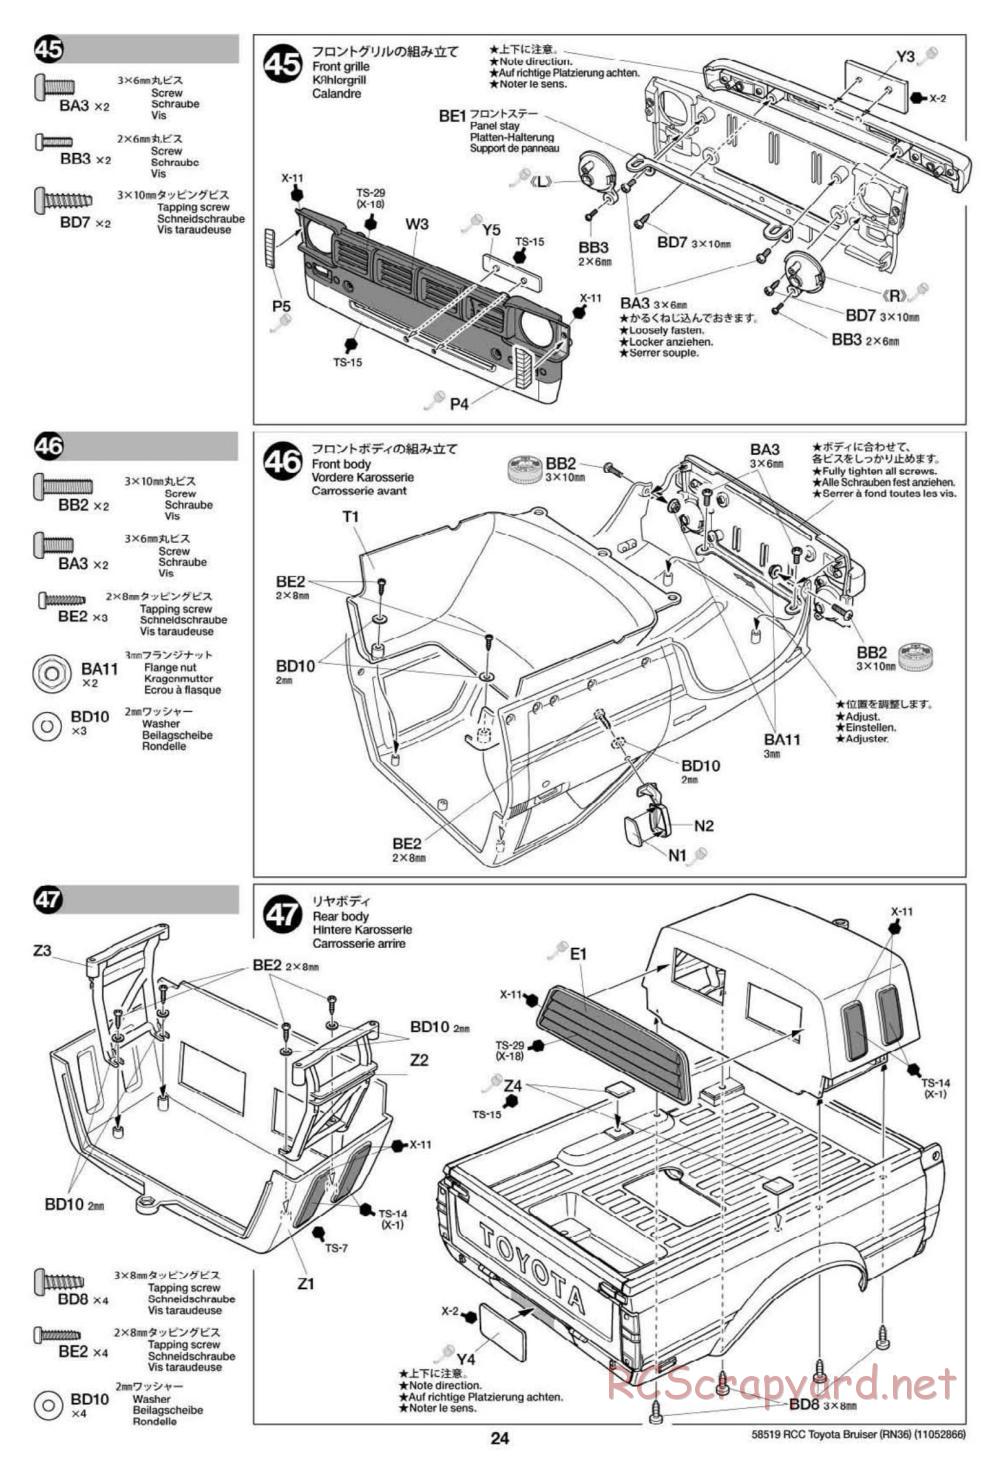 Tamiya - Toyota 4x4 Pick Up Bruiser Chassis - Manual - Page 24